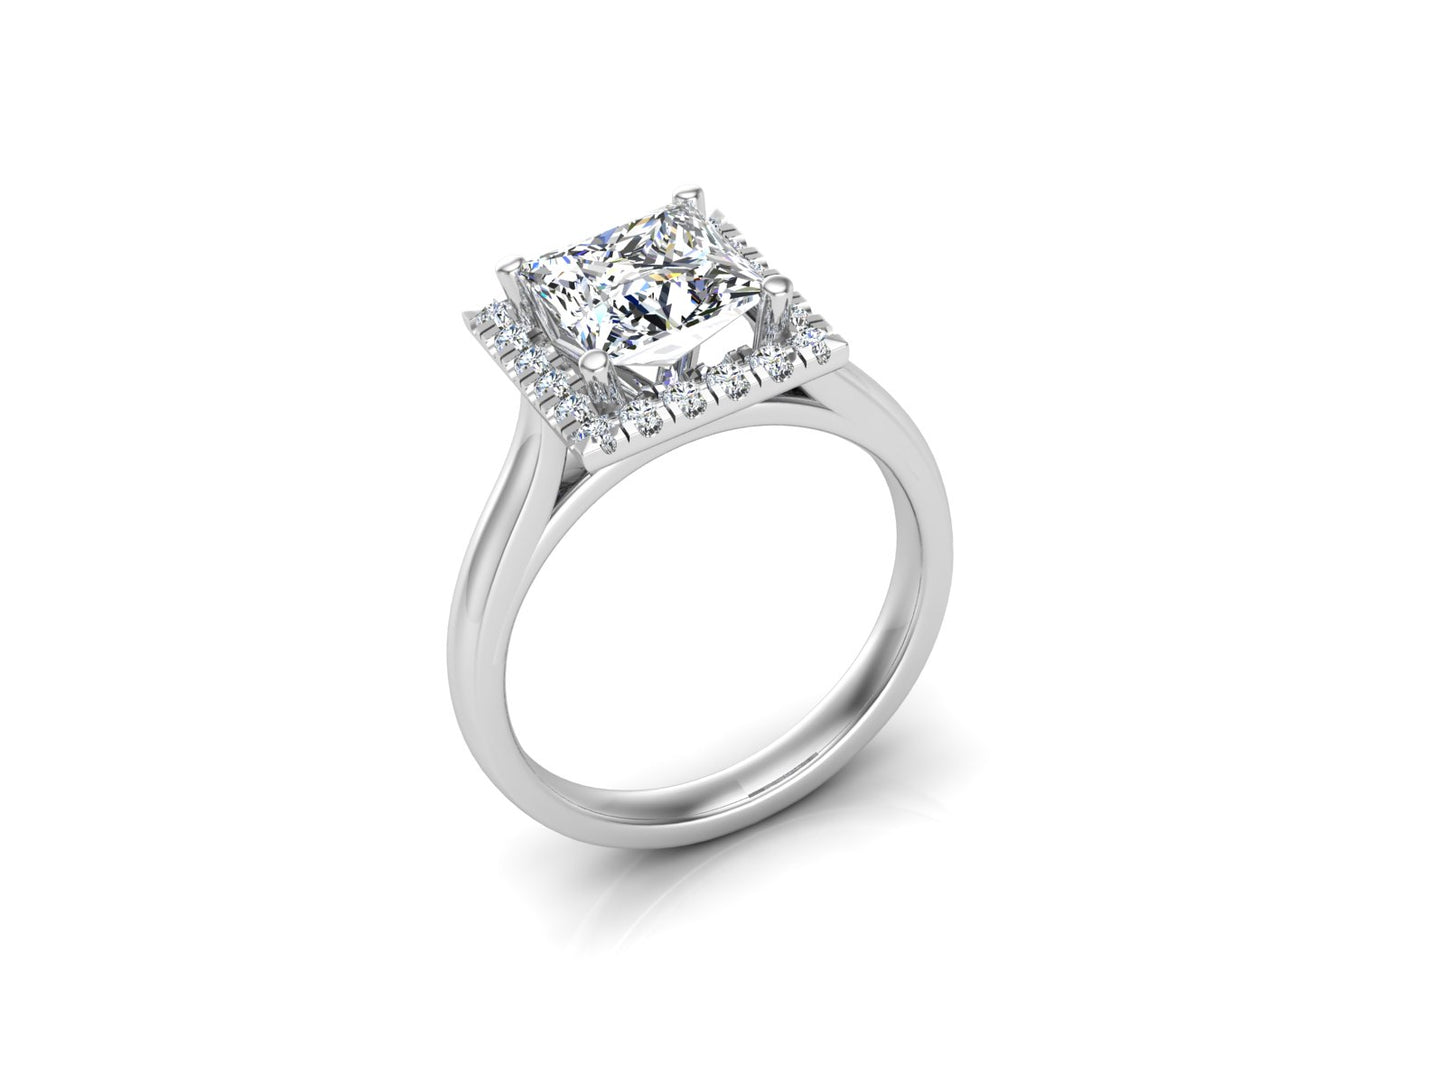 Princess Cut 1.1 CT 5.5mm Moissanite Ring, Halo Engagament Ring, 14k Rose Gold Ring